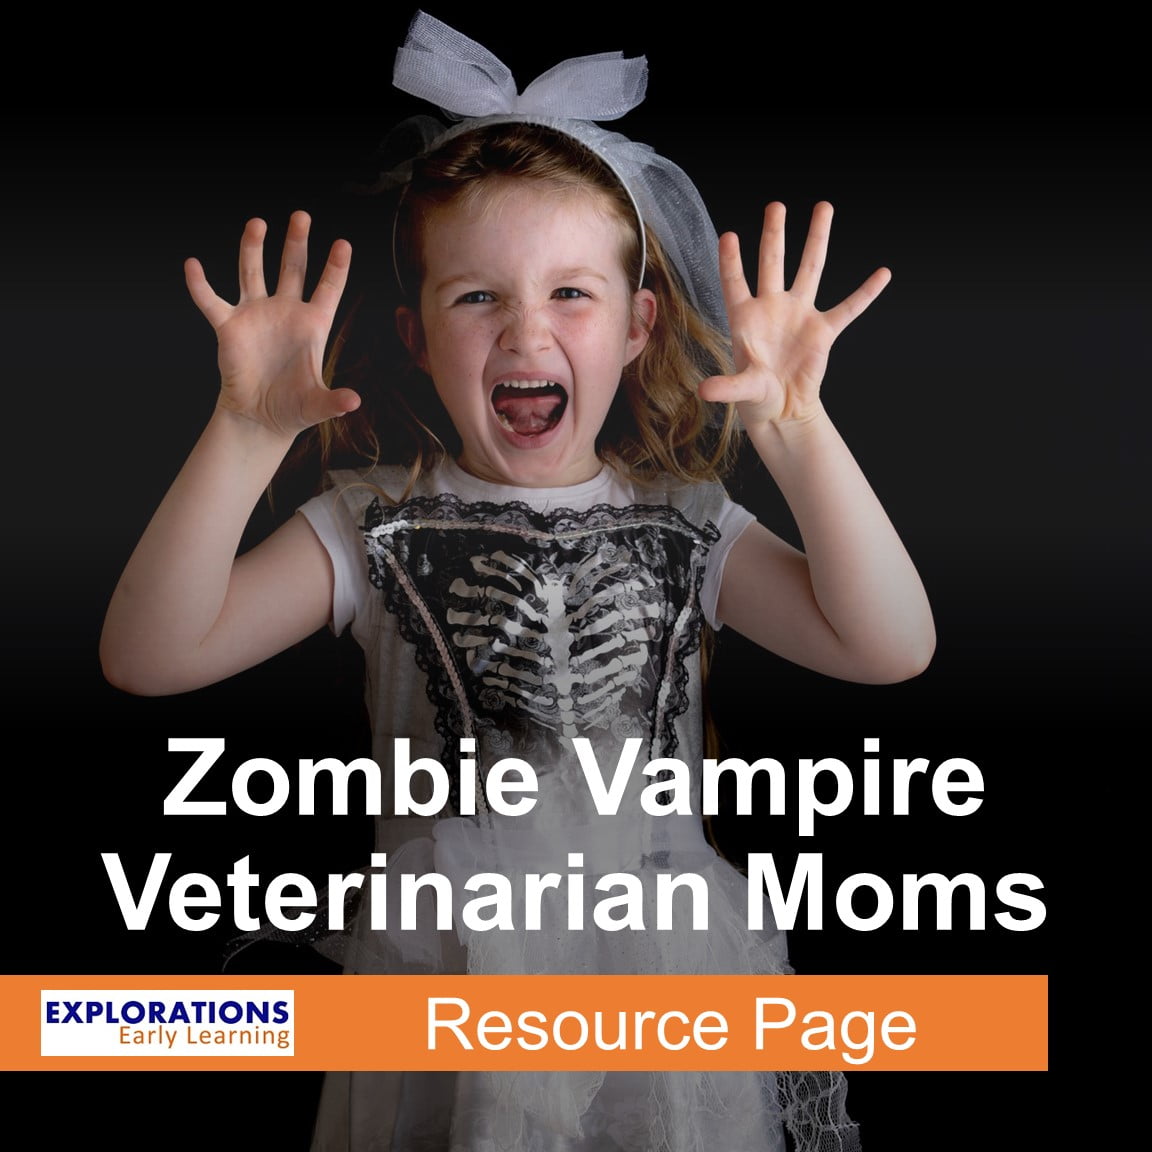 Zombie Vampire Veterinarian Moms | Resource Page